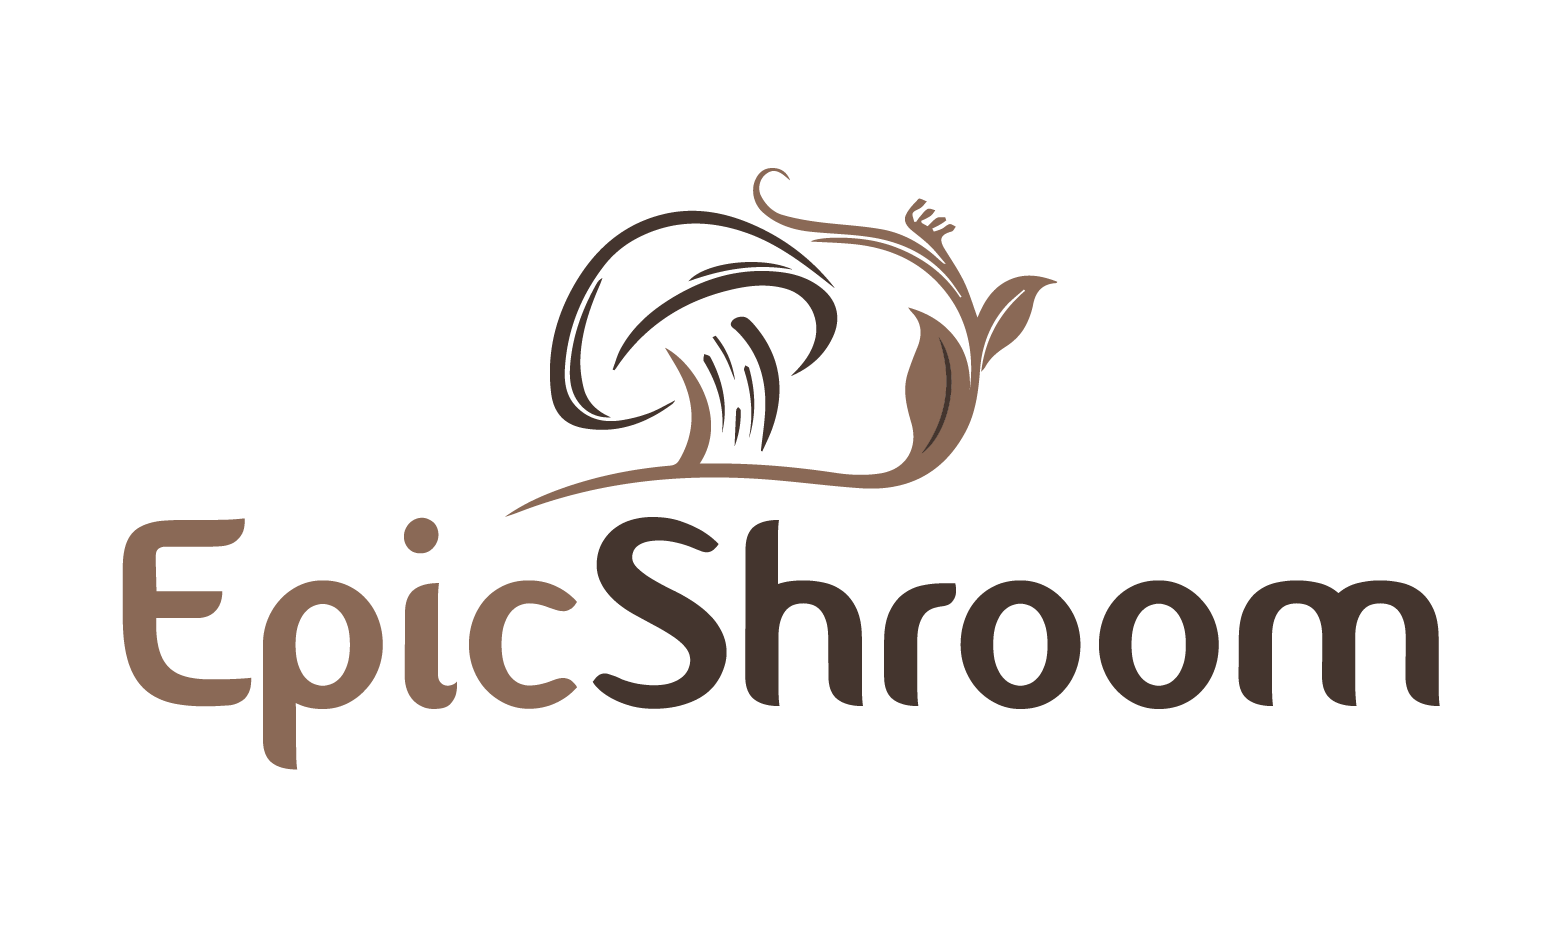 EpicShroom.com - Creative brandable domain for sale